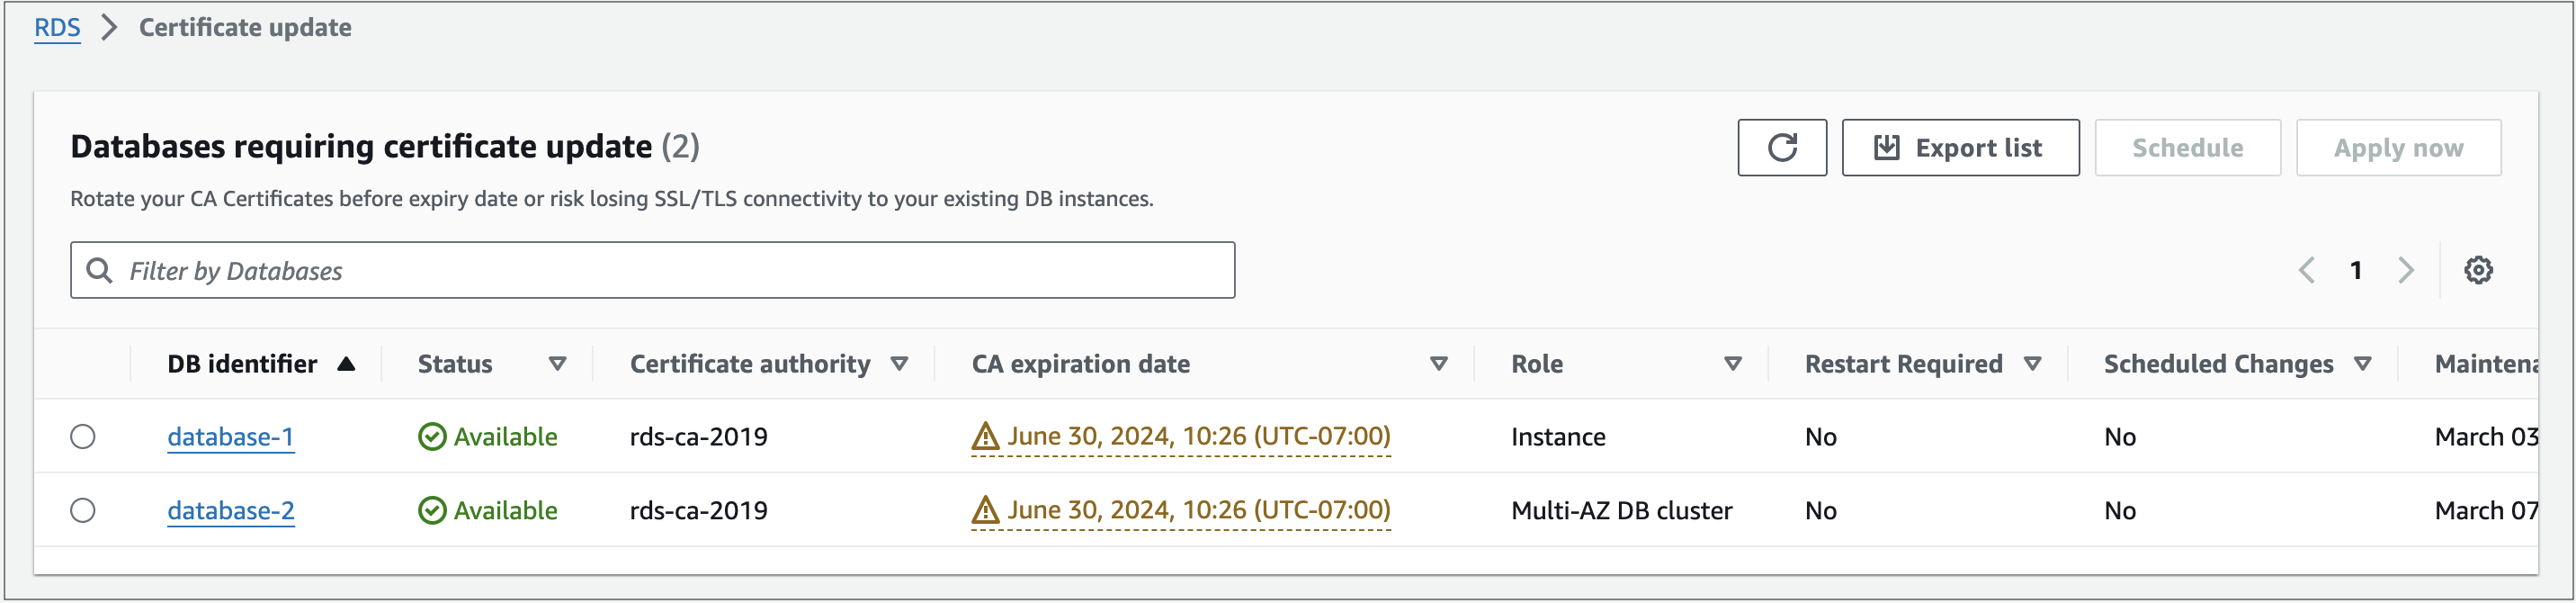 
                                Update CA certificate for 
                                    DB instance
                            